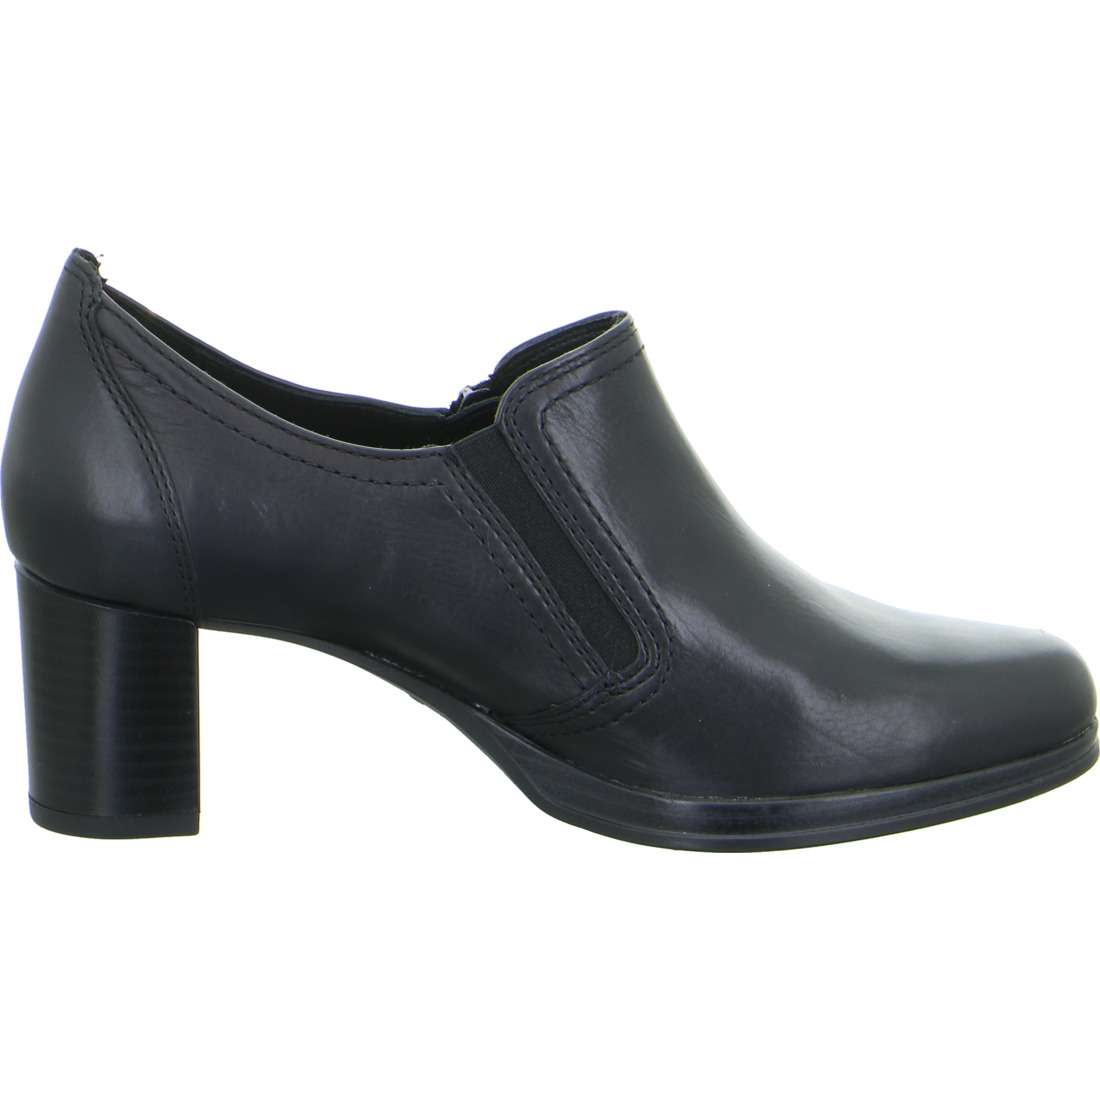 Ara 12-22907-01 Black H Fit Ankle Boots/Court Shoes